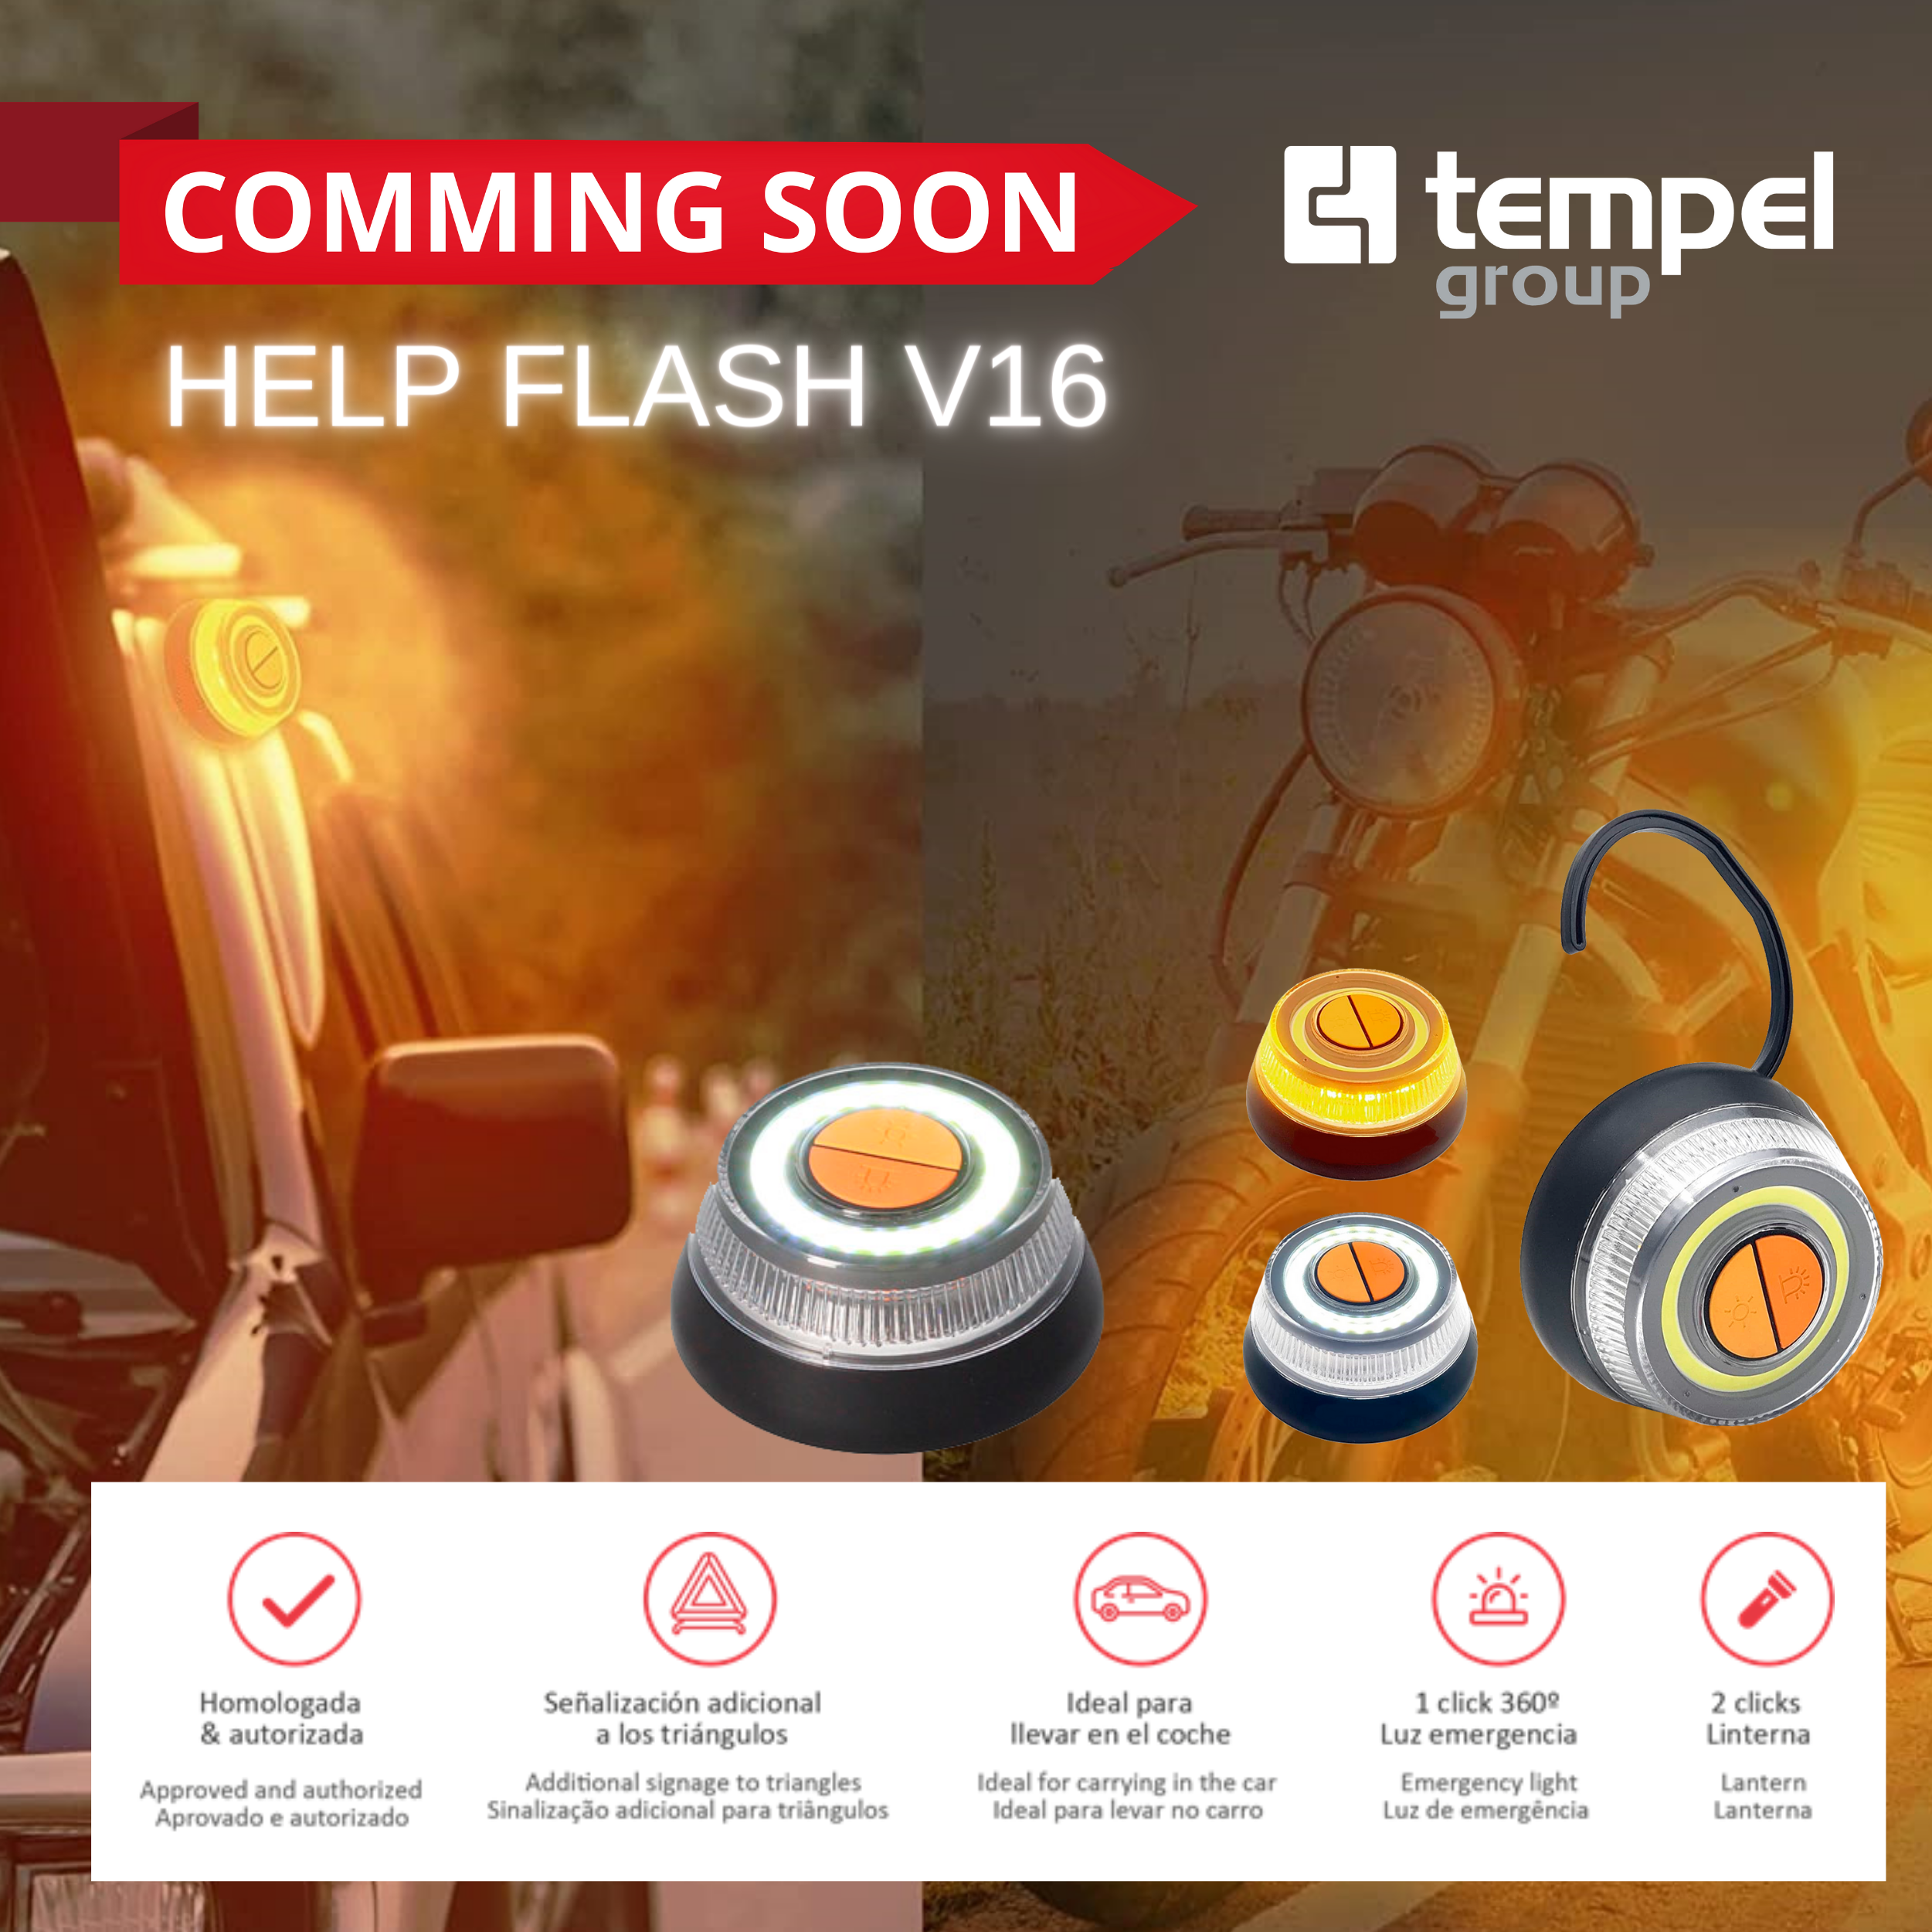 HELP FLASH V16 - Tempel Group